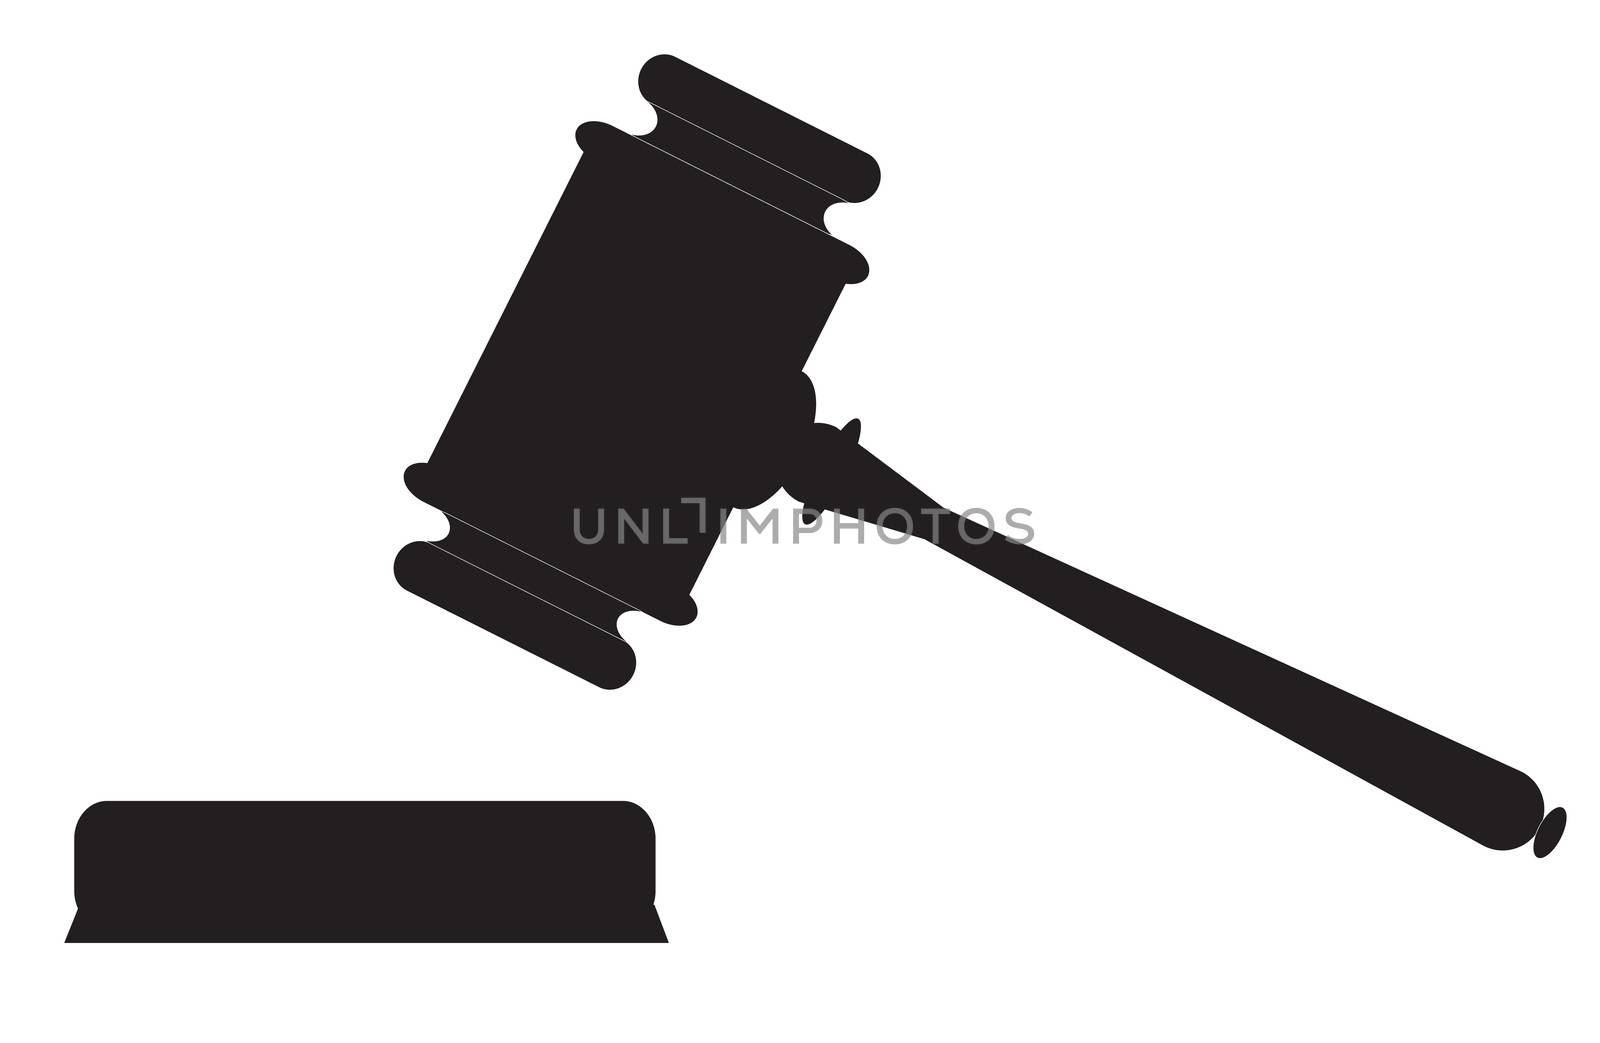 Auction hammer symbol. Law judge gavel icon. Flat design style.